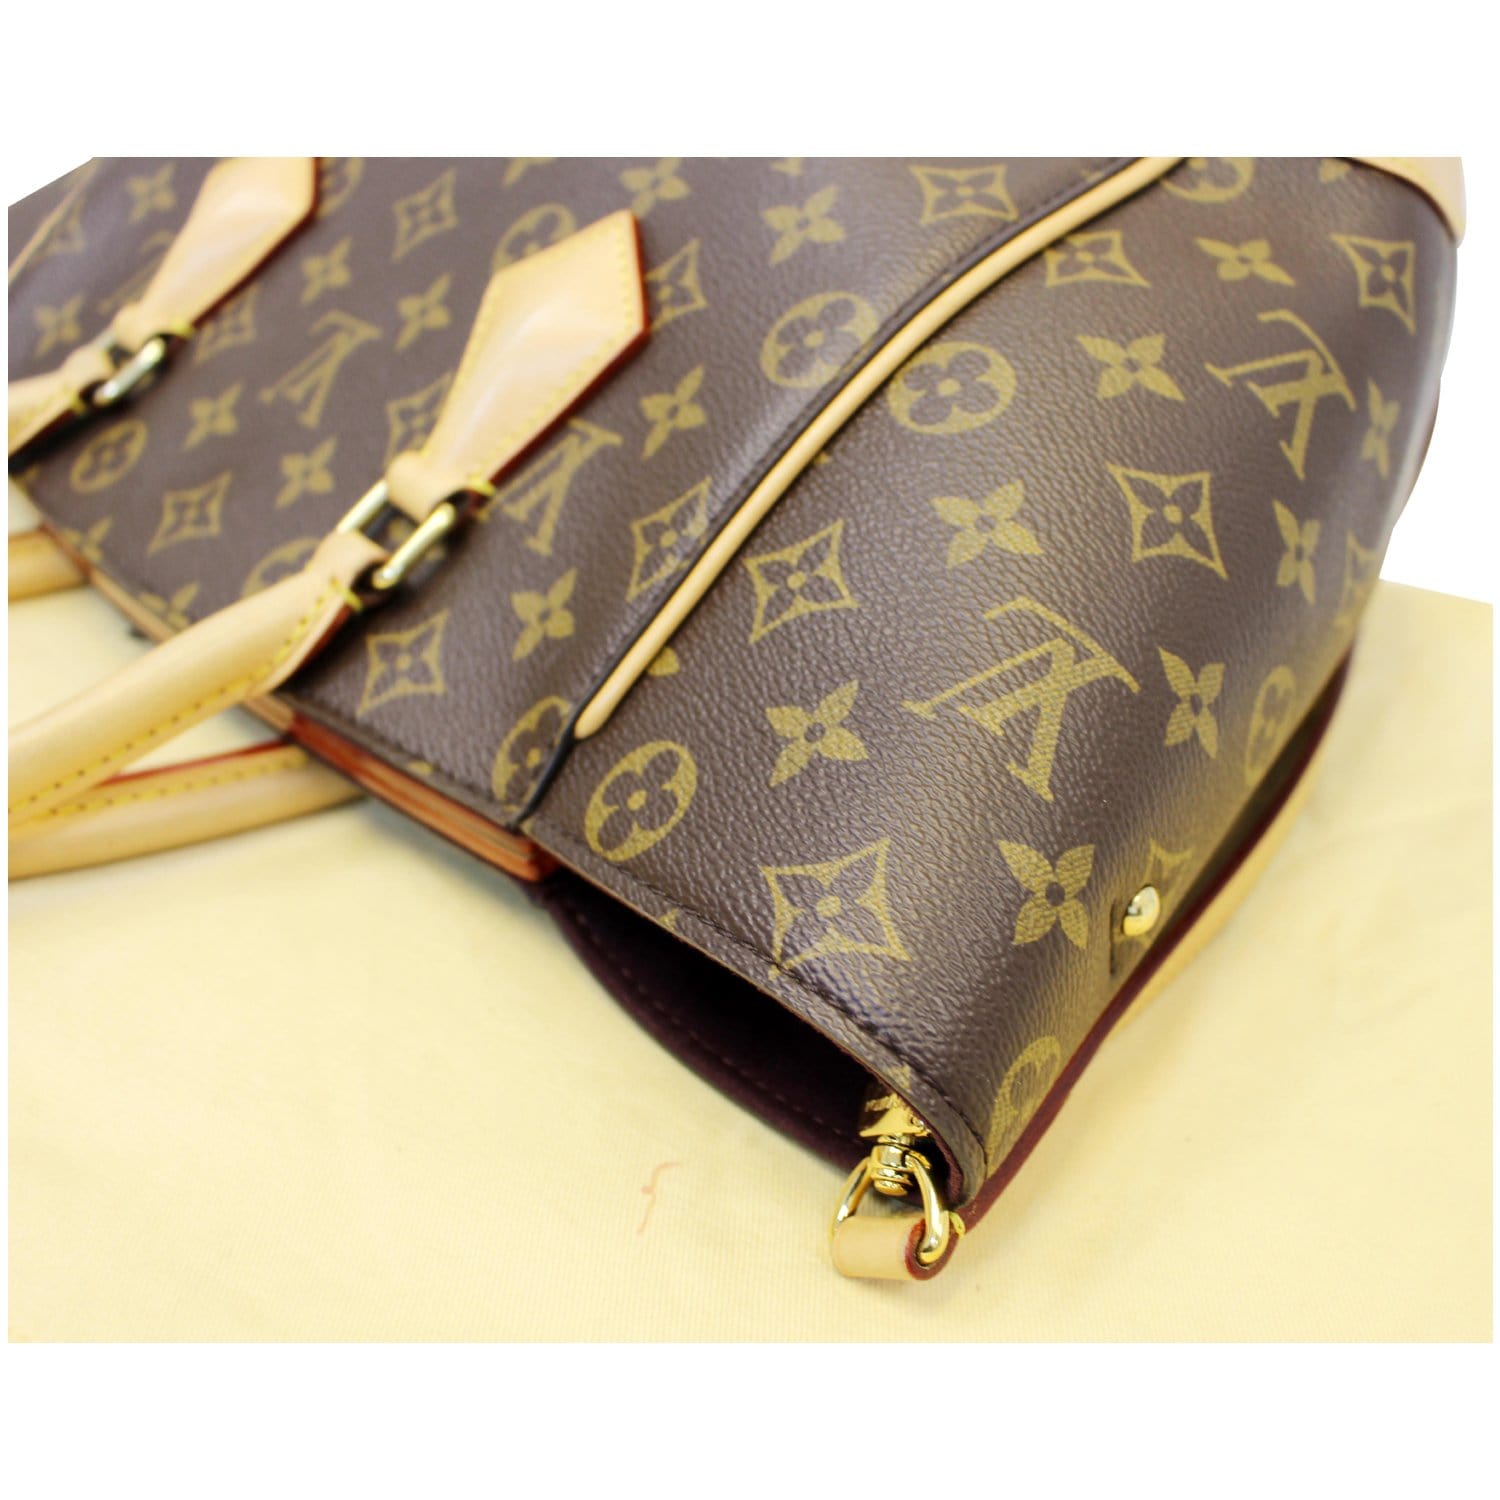 Luv Luxe - Practical Everyday Bag = Louis Vuitton Monogram Phenix